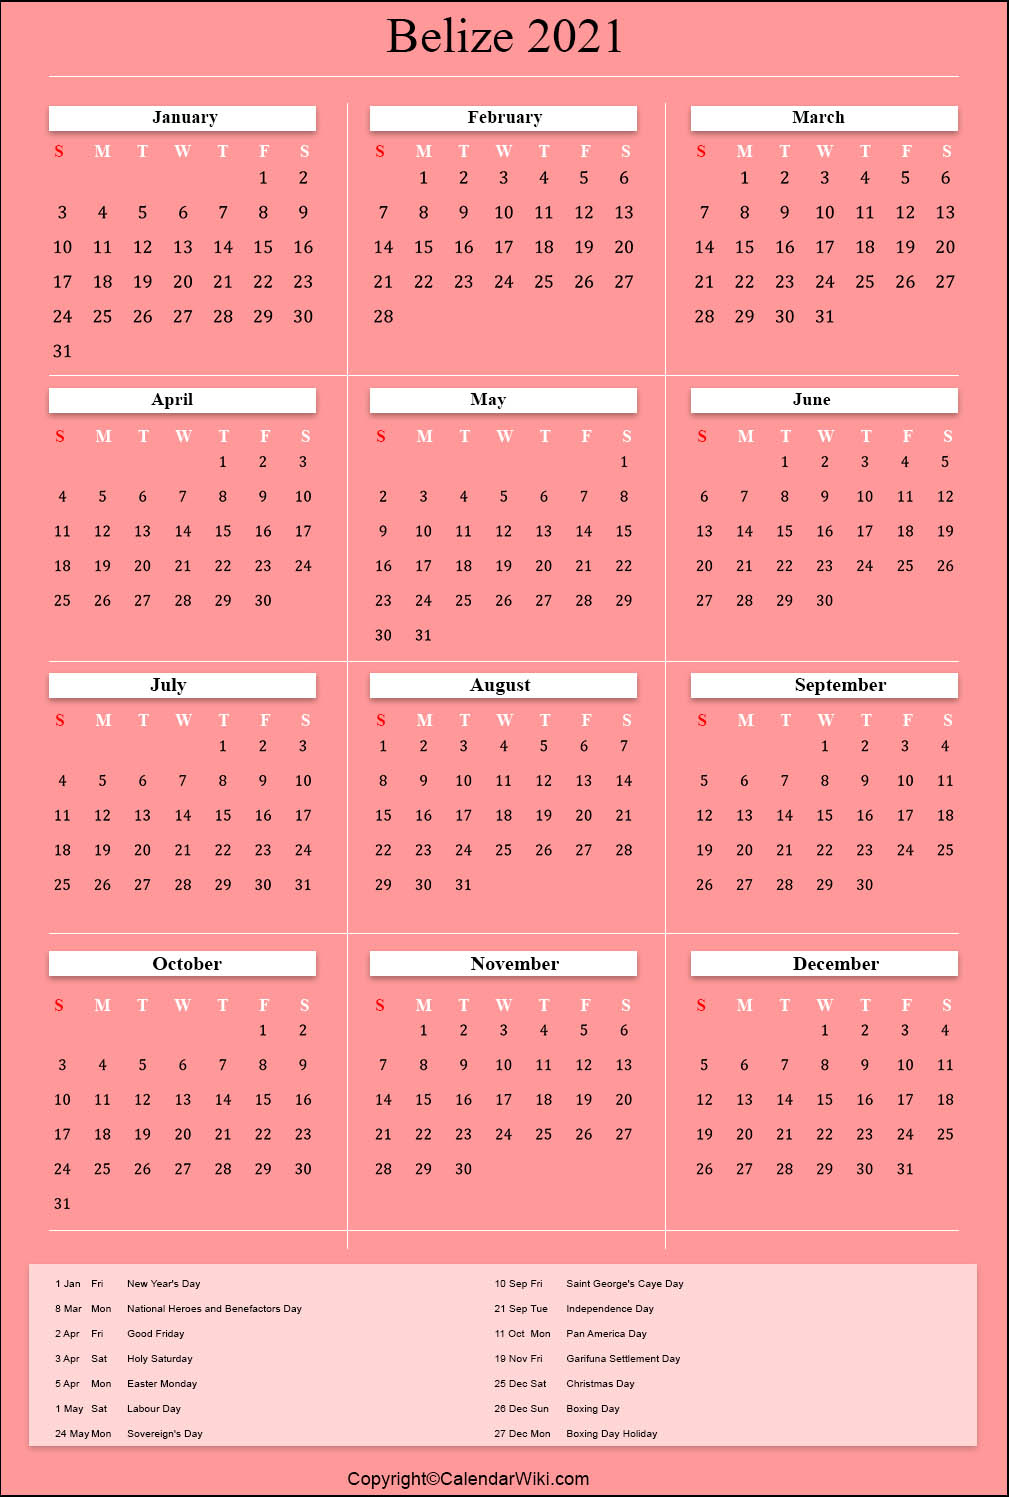 printable-belize-calendar-2021-with-holidays-public-holidays